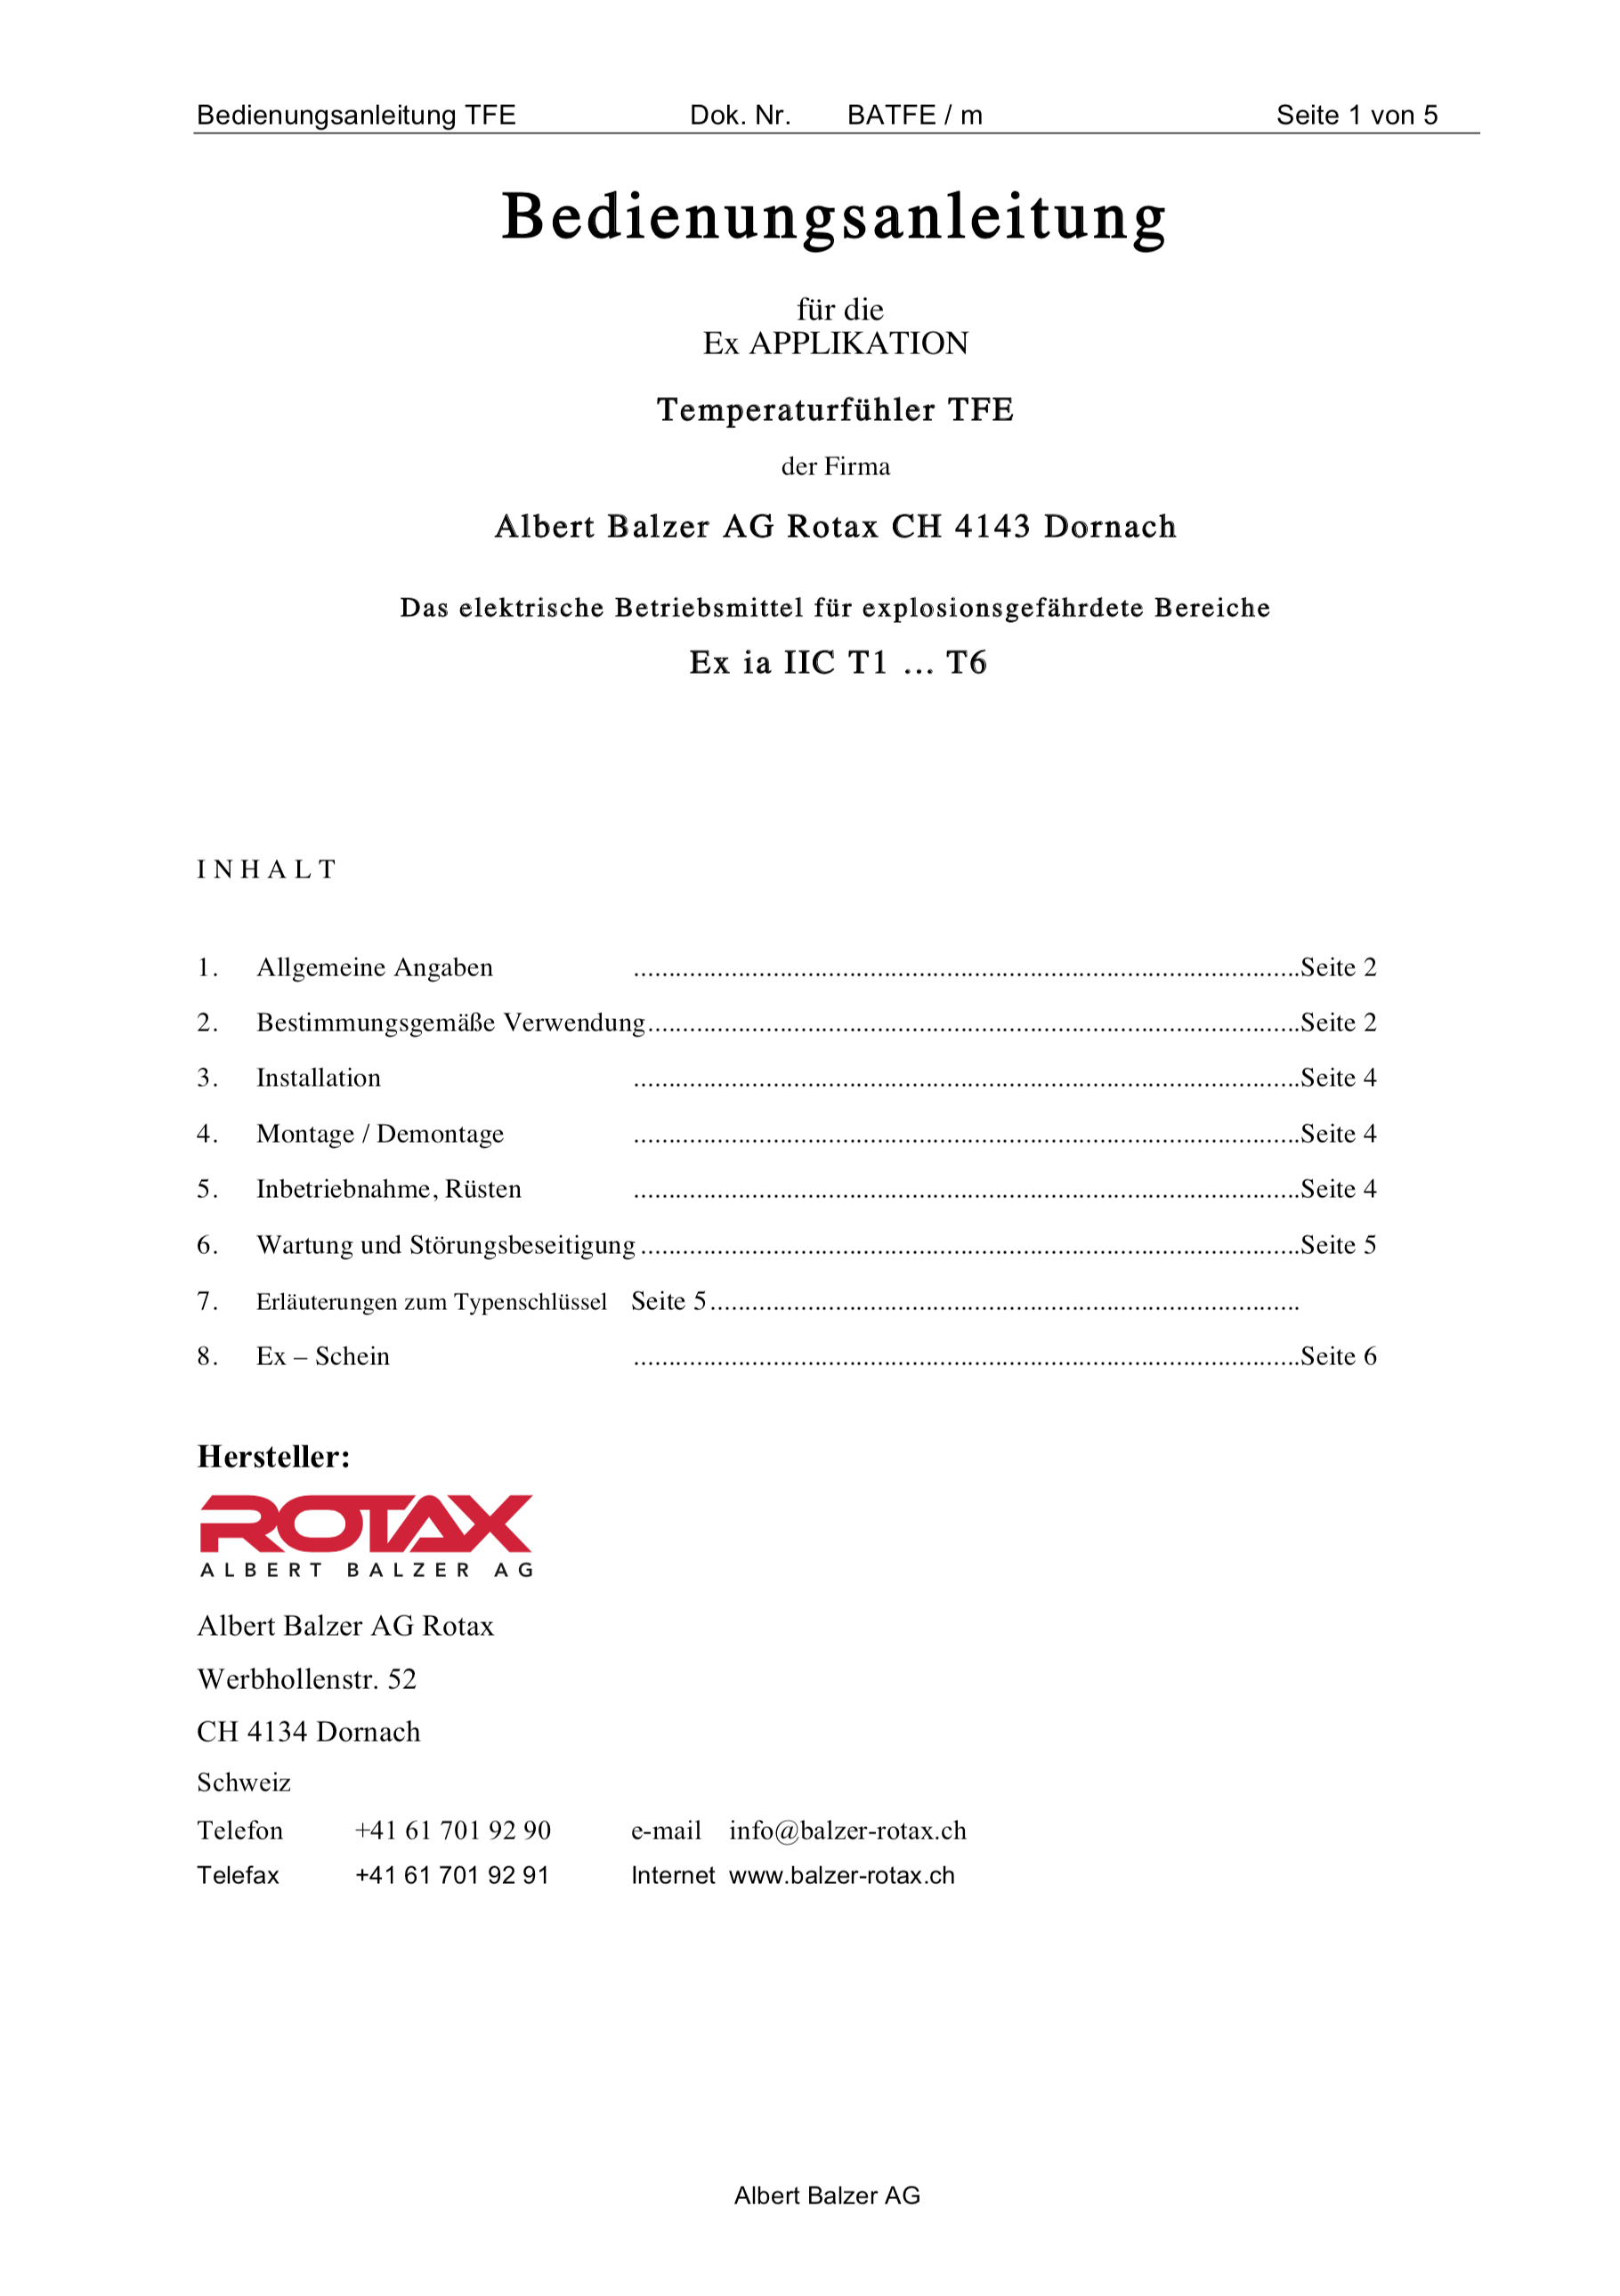 Bedienanleitung_EX_ia-m.pdf